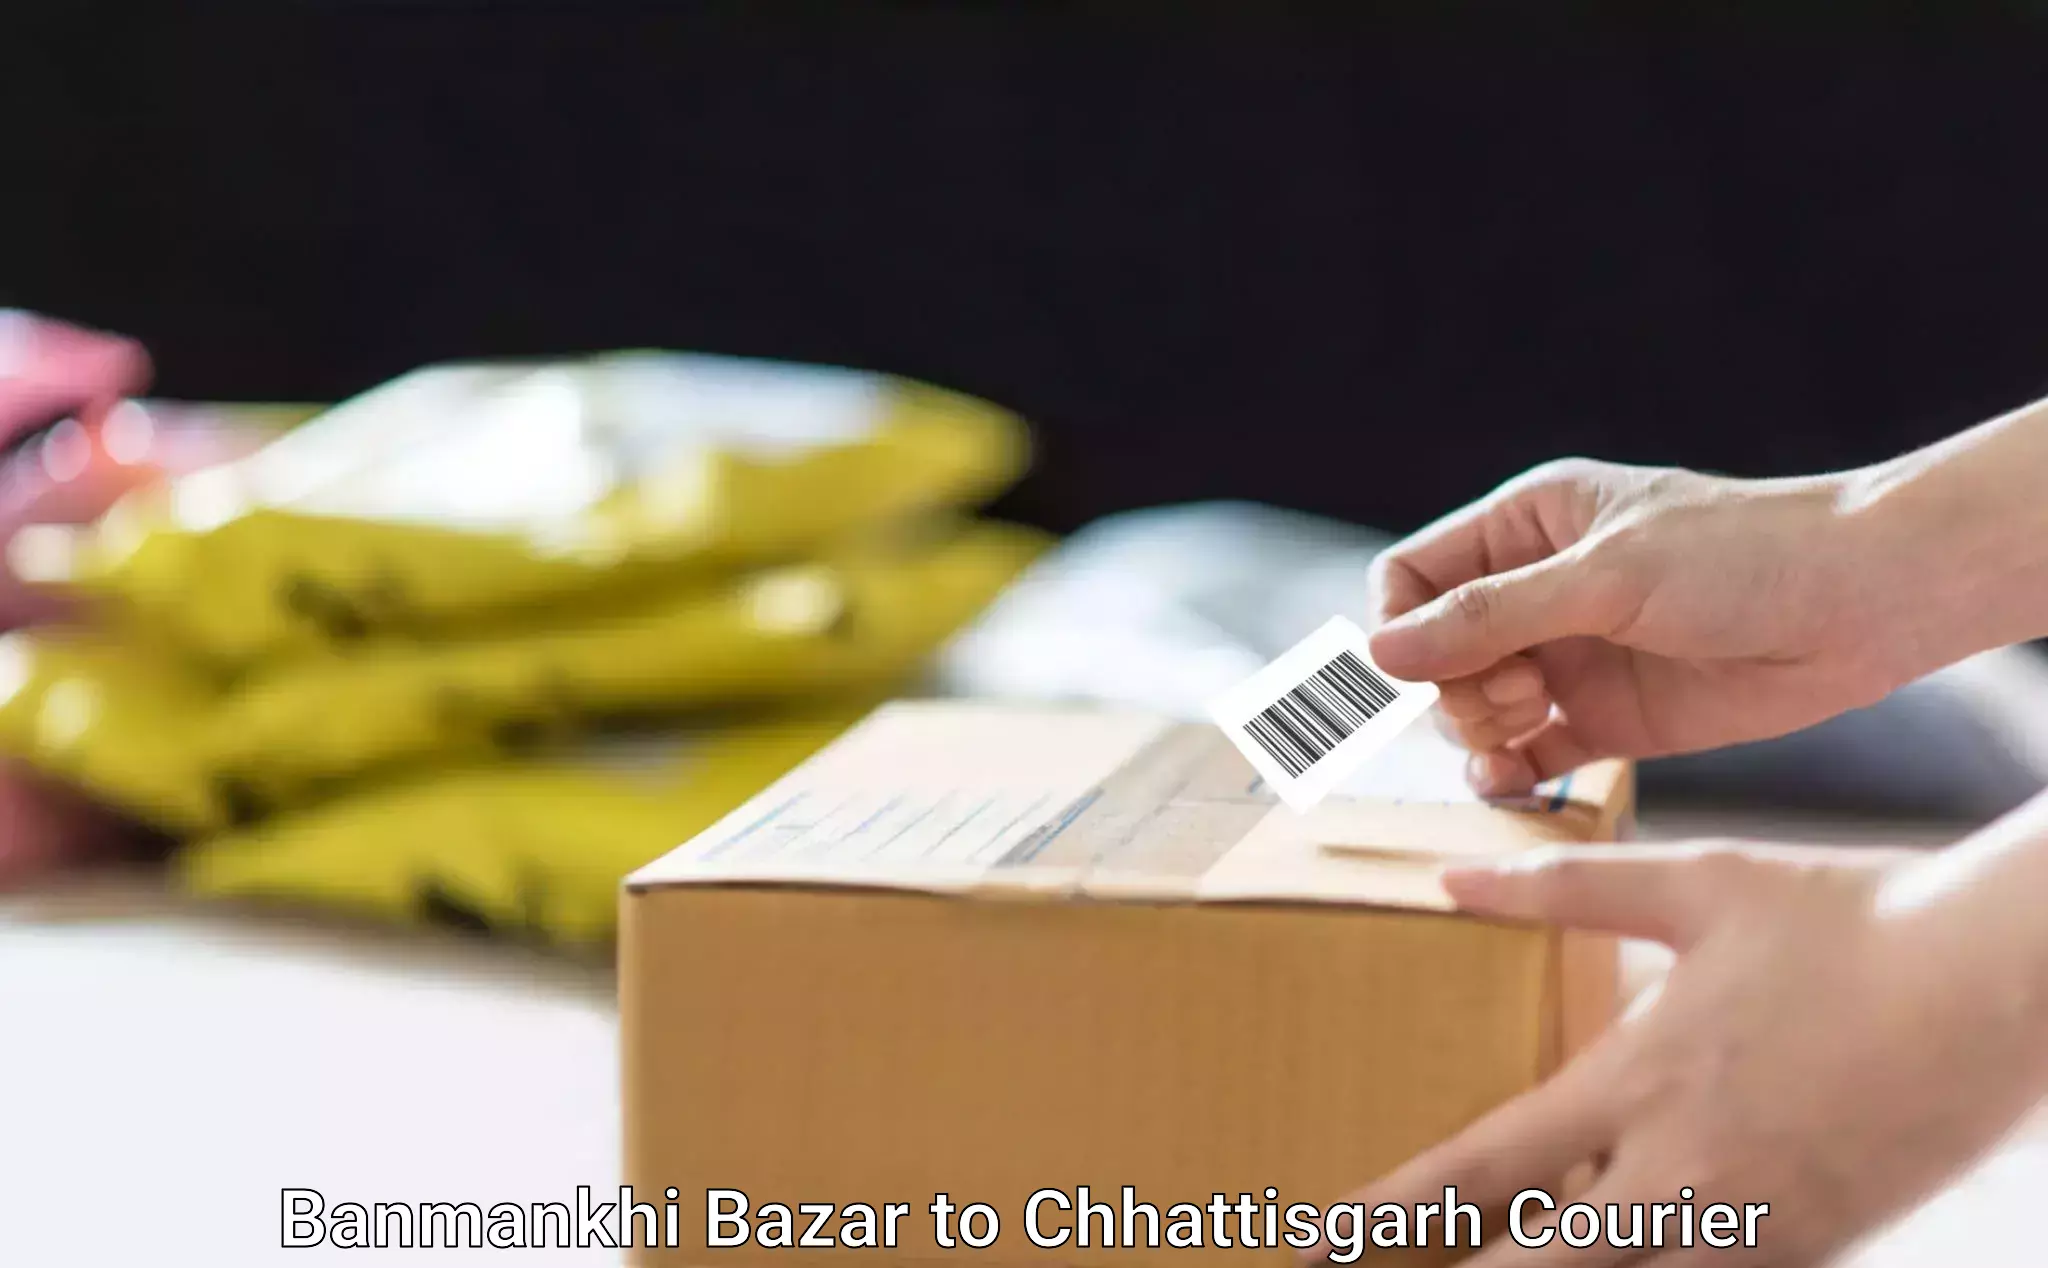 Trusted moving company Banmankhi Bazar to Chhattisgarh